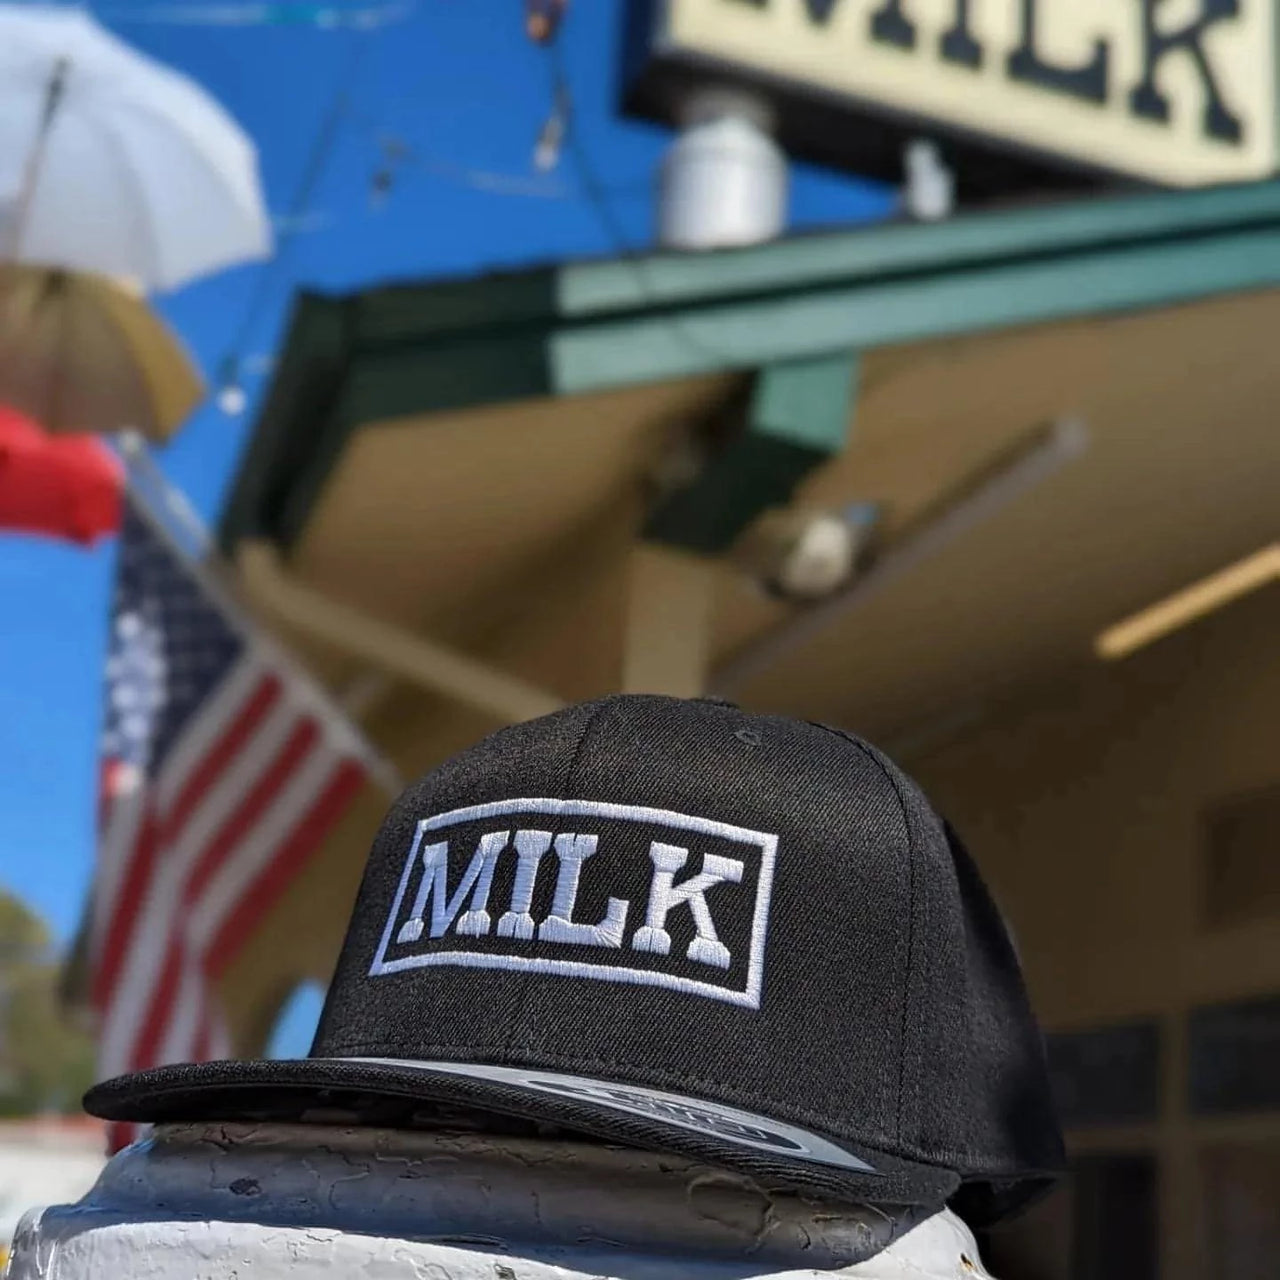 "Milk" flexfit snapback hat